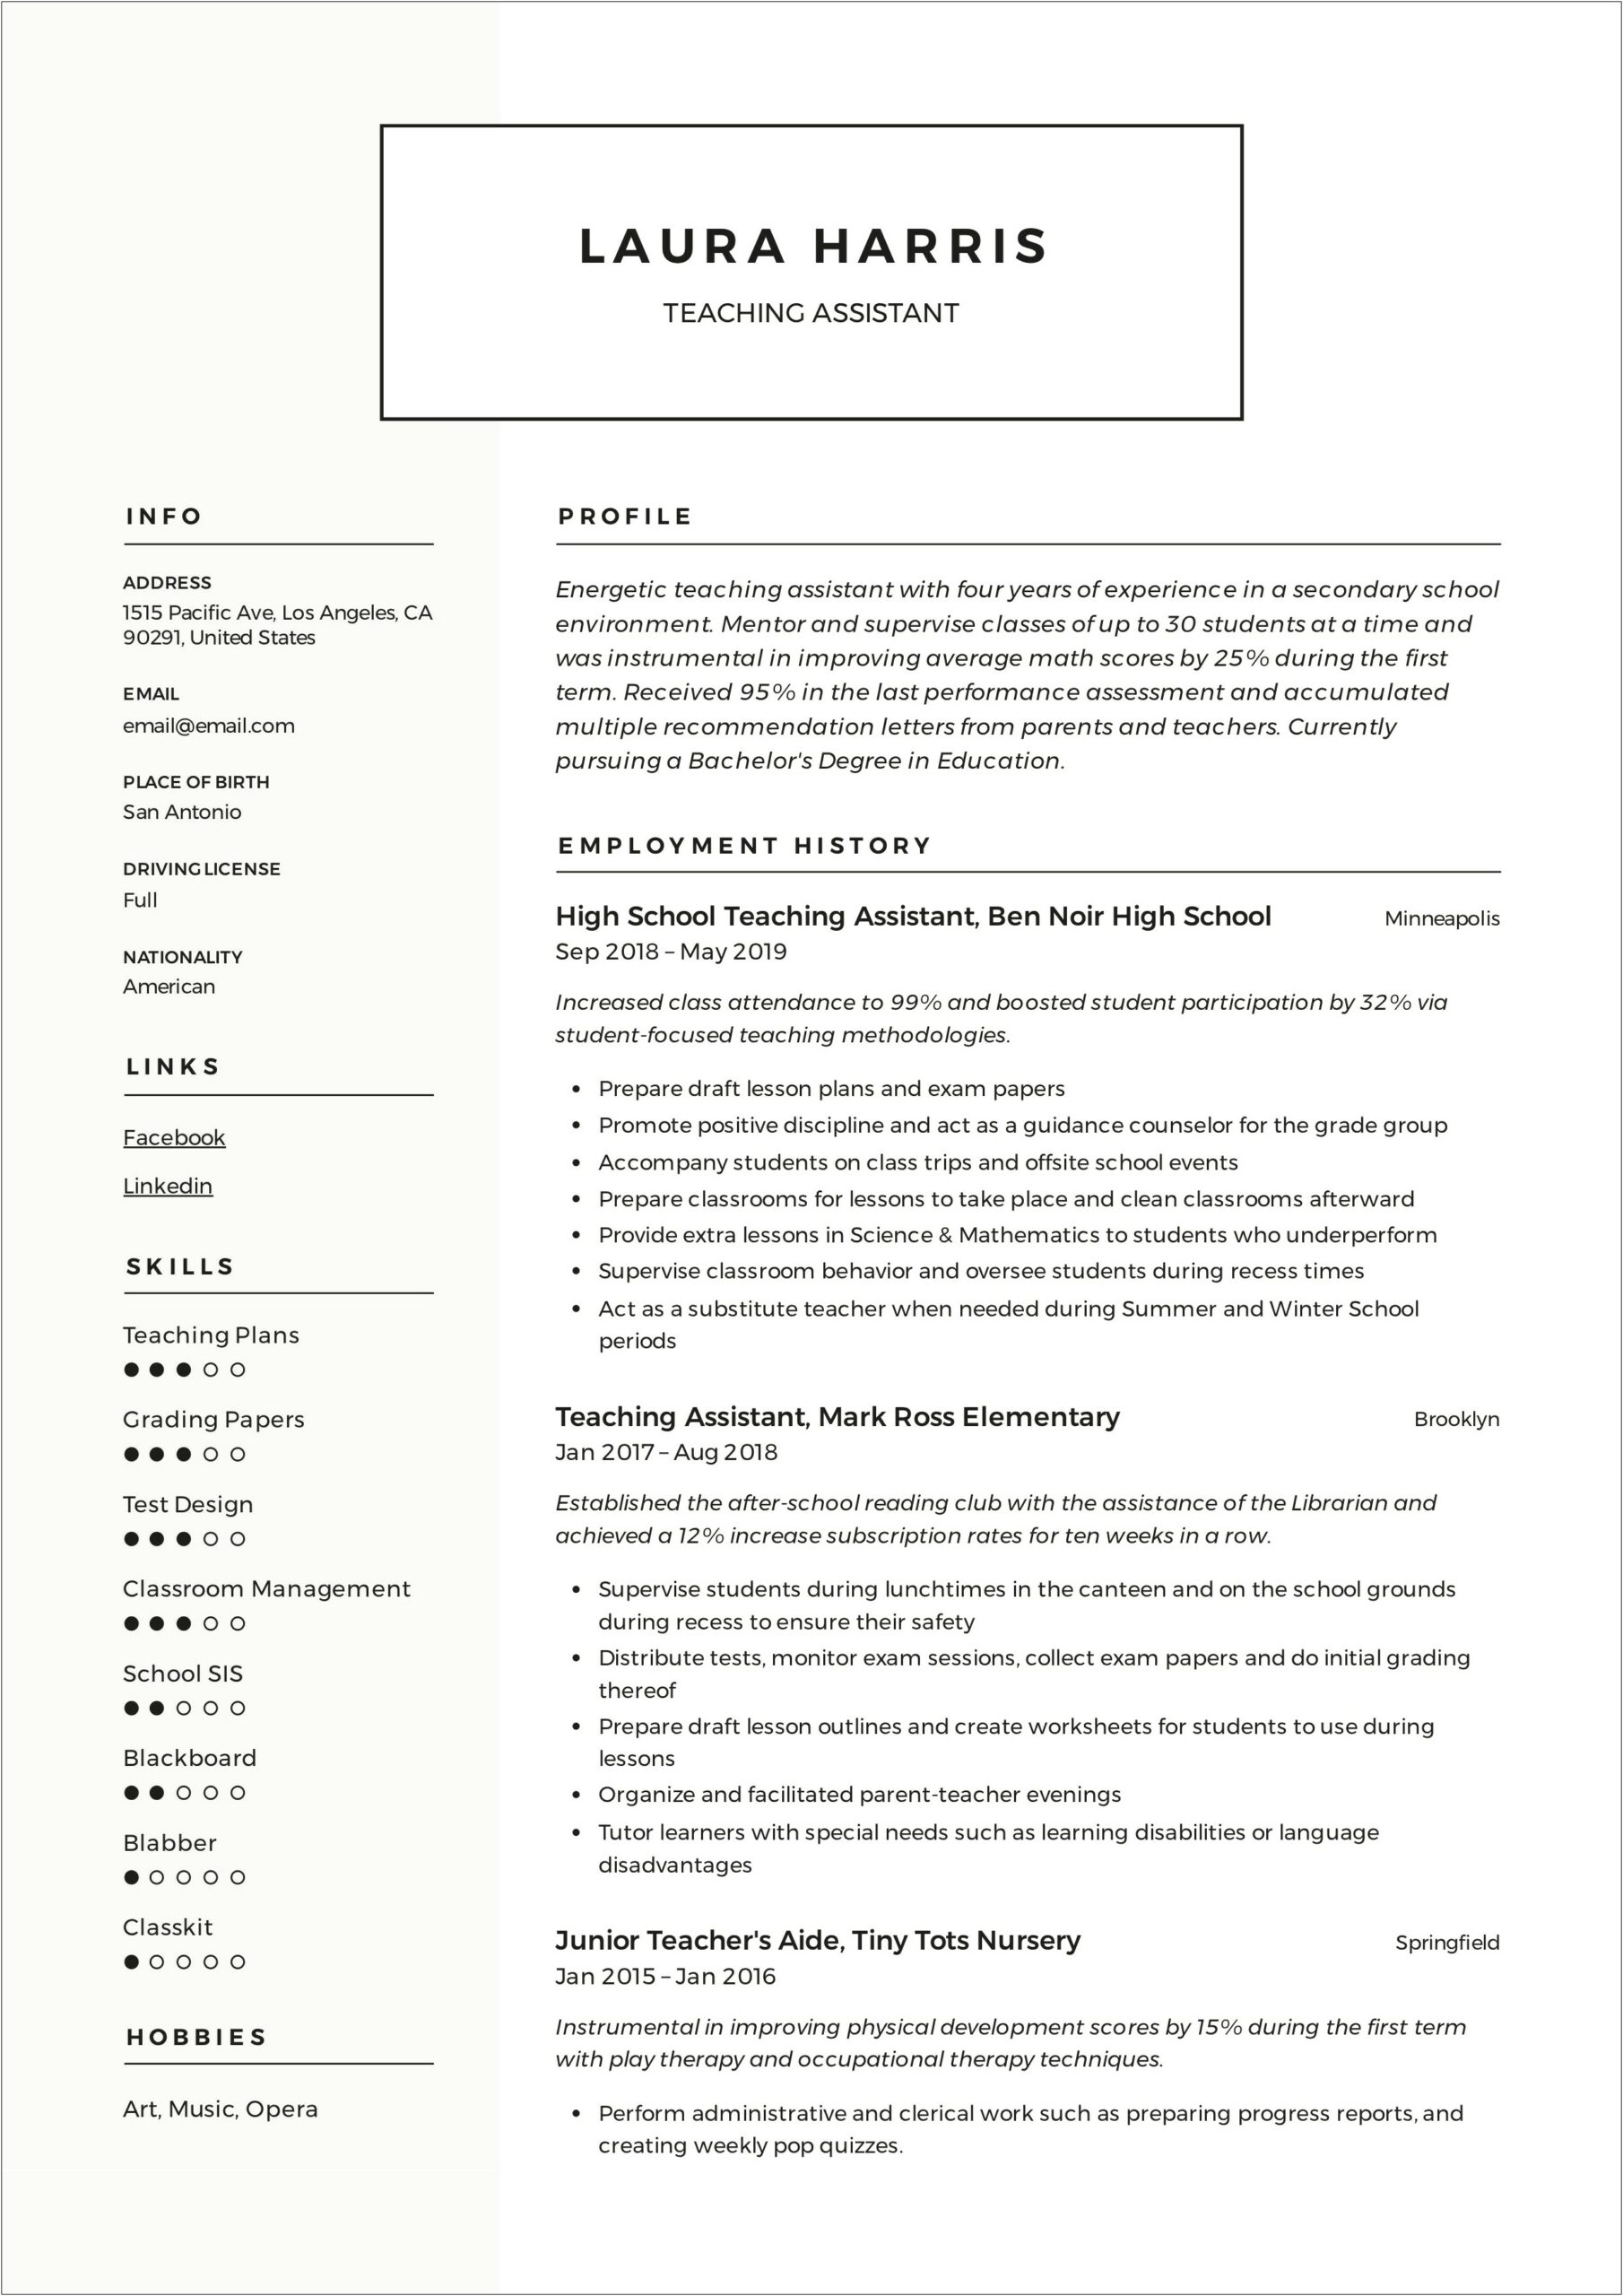 Sample Resume For Applying As A Teacher Aide